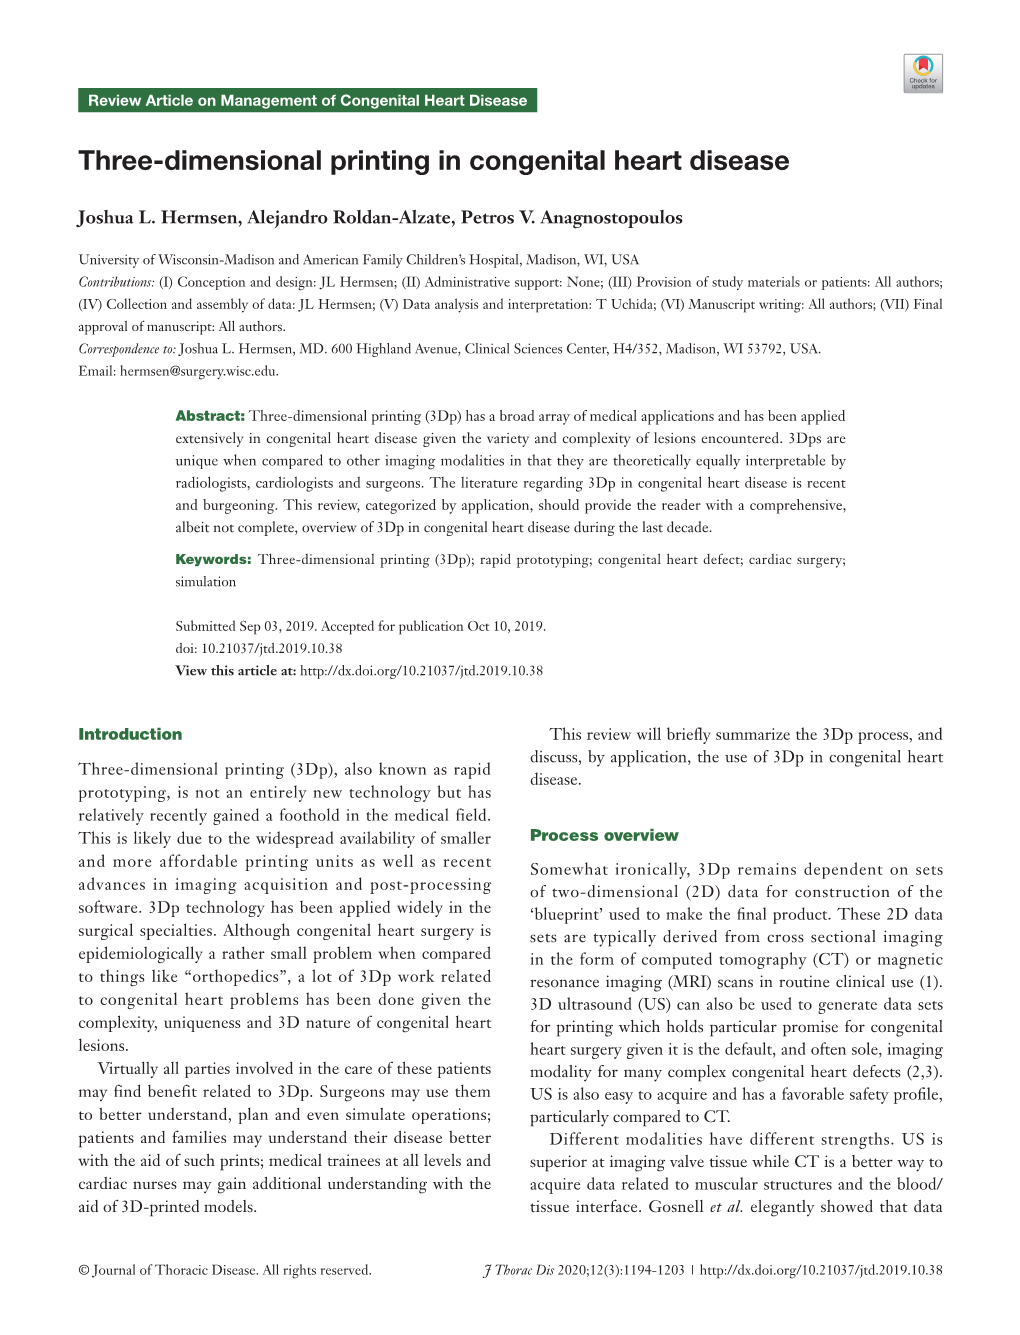 Three-Dimensional Printing in Congenital Heart Disease